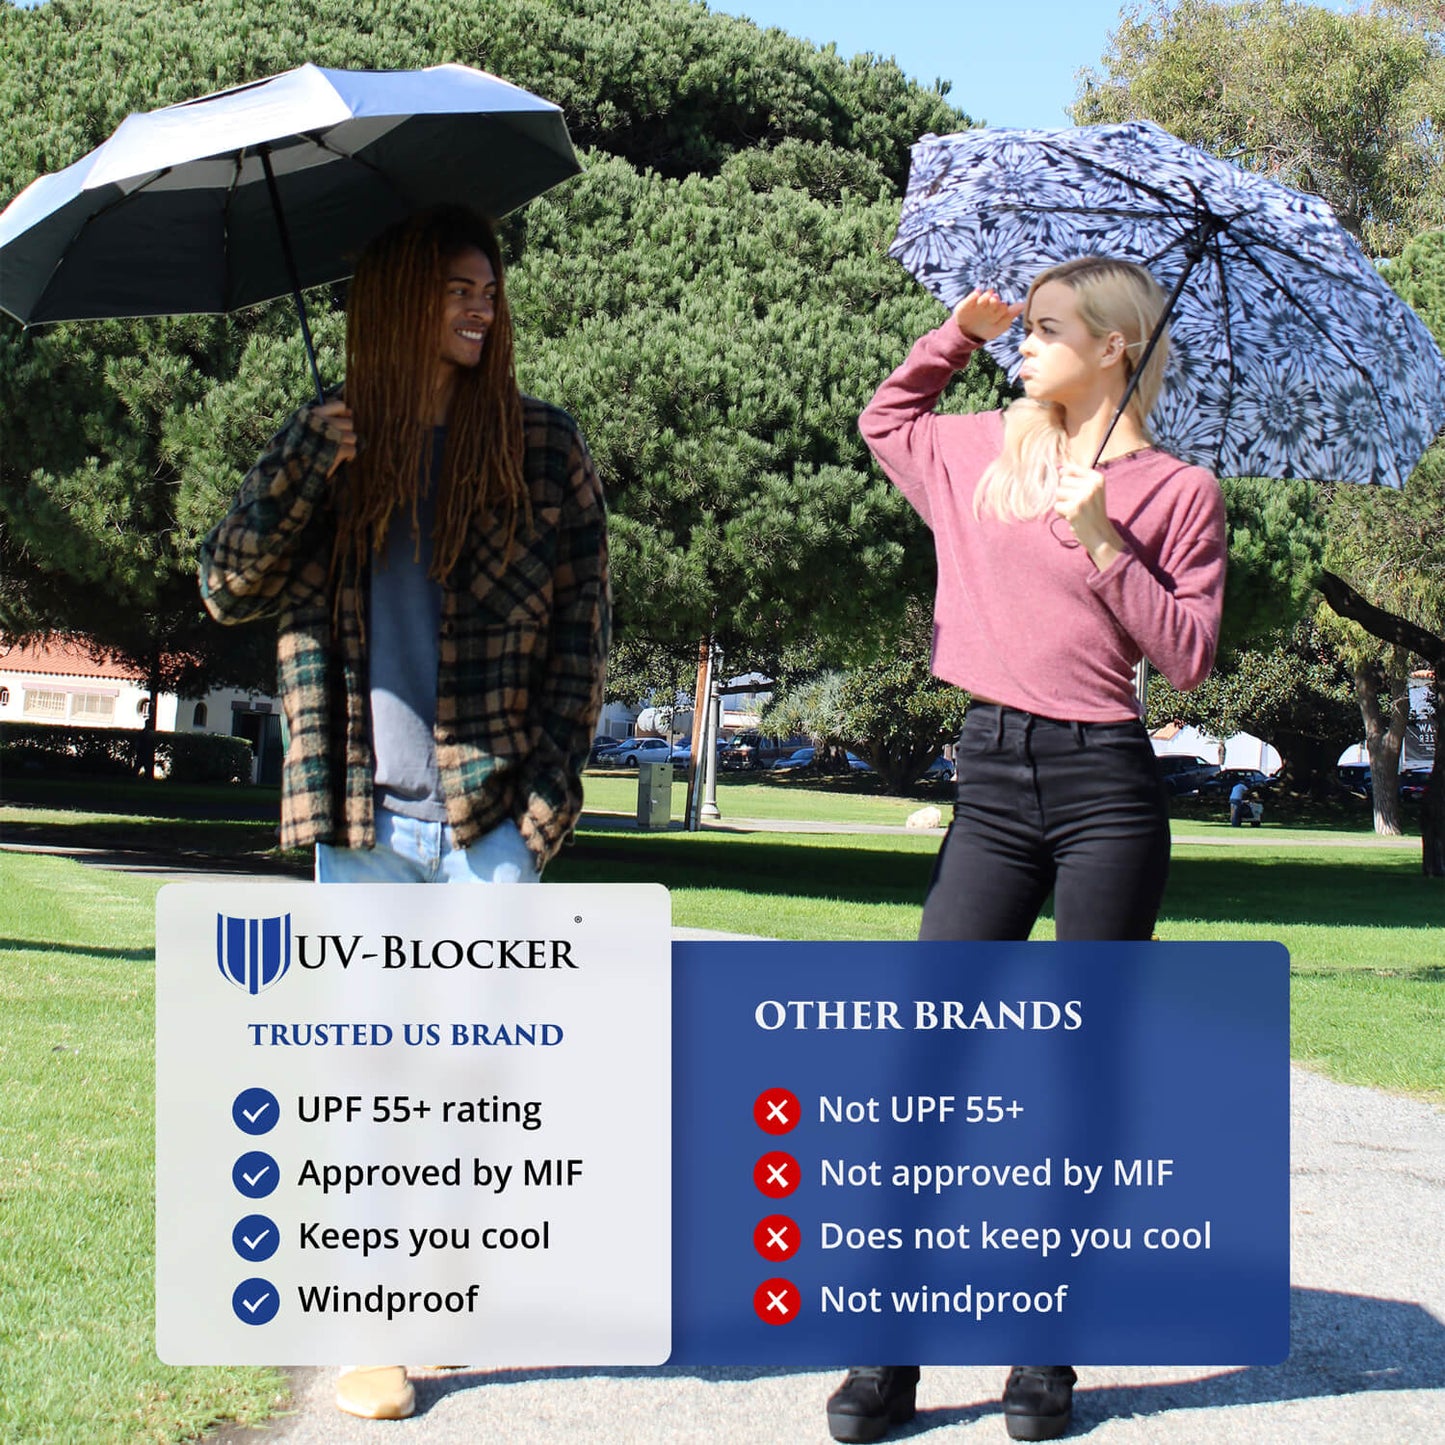 UV-Blocker Sun Umbrella is a Trusted Brand